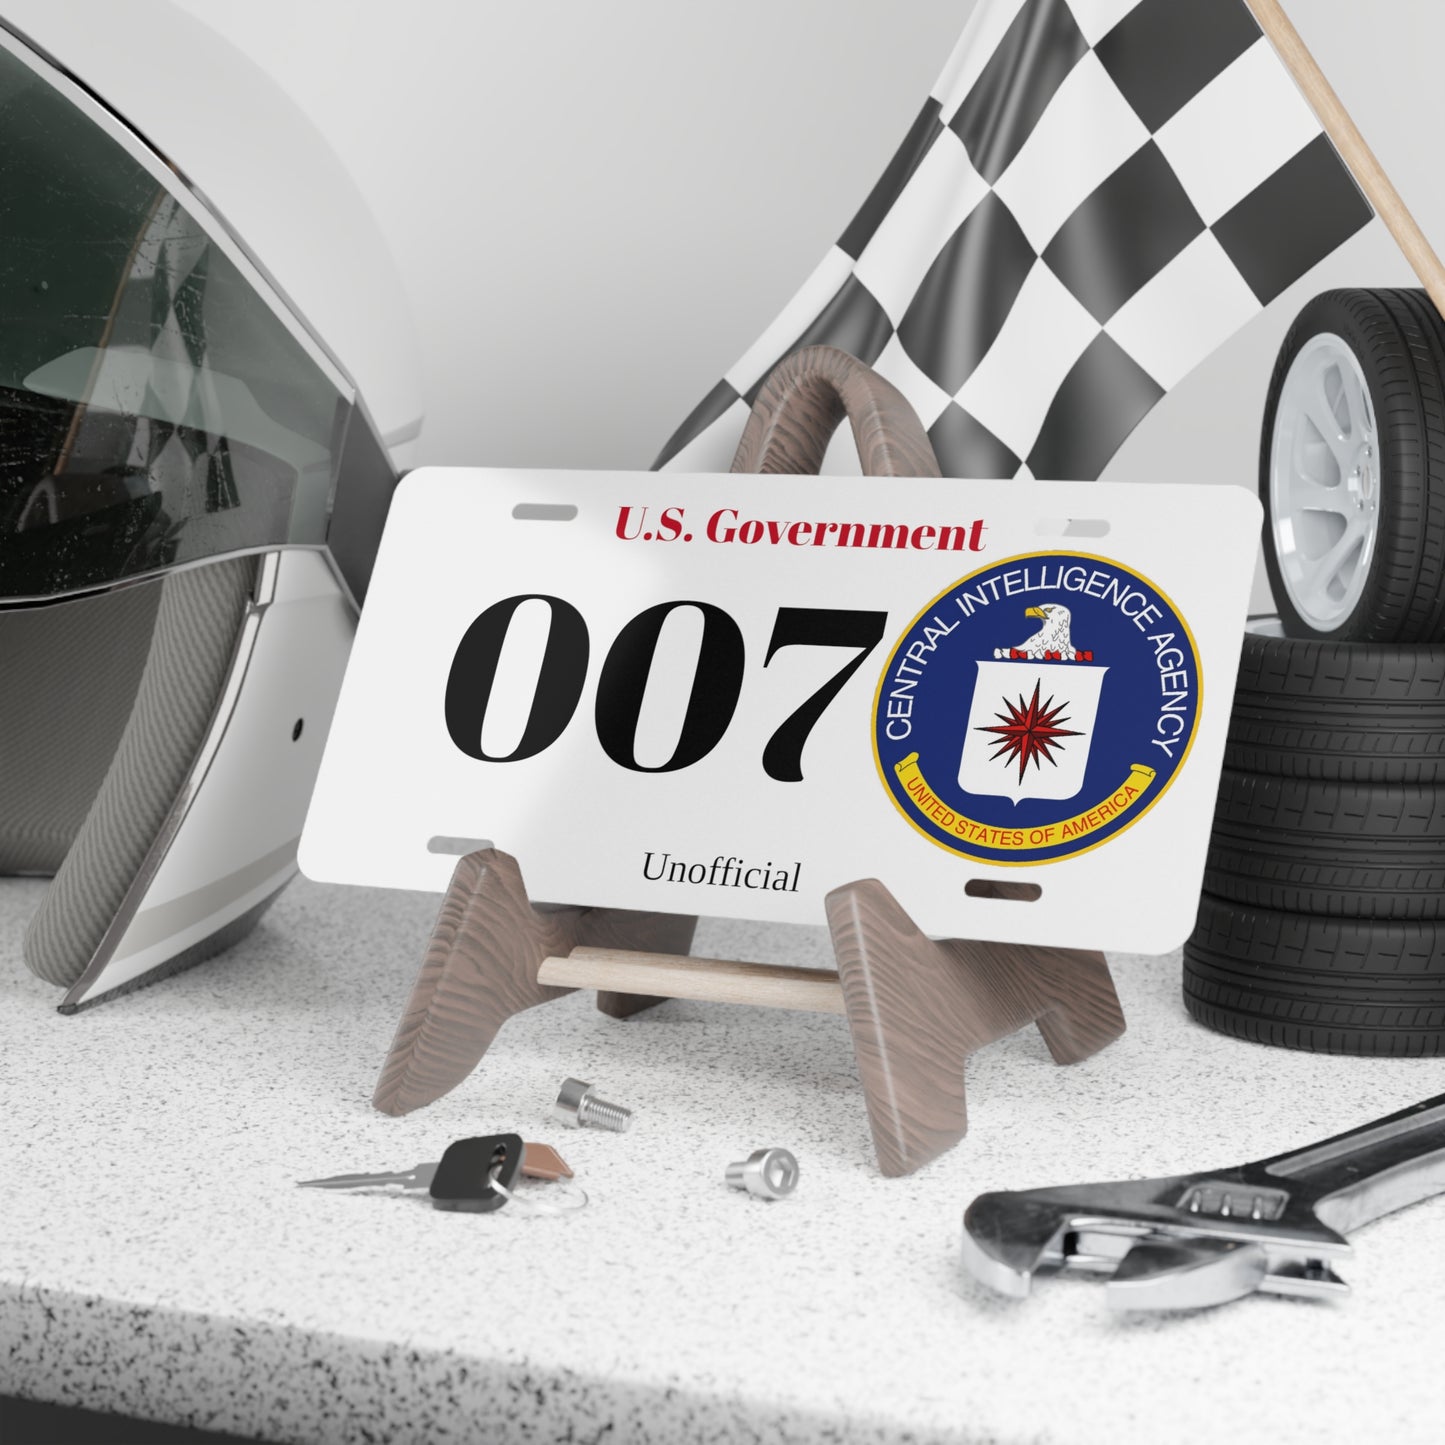 CIA 007 Vanity License Plate